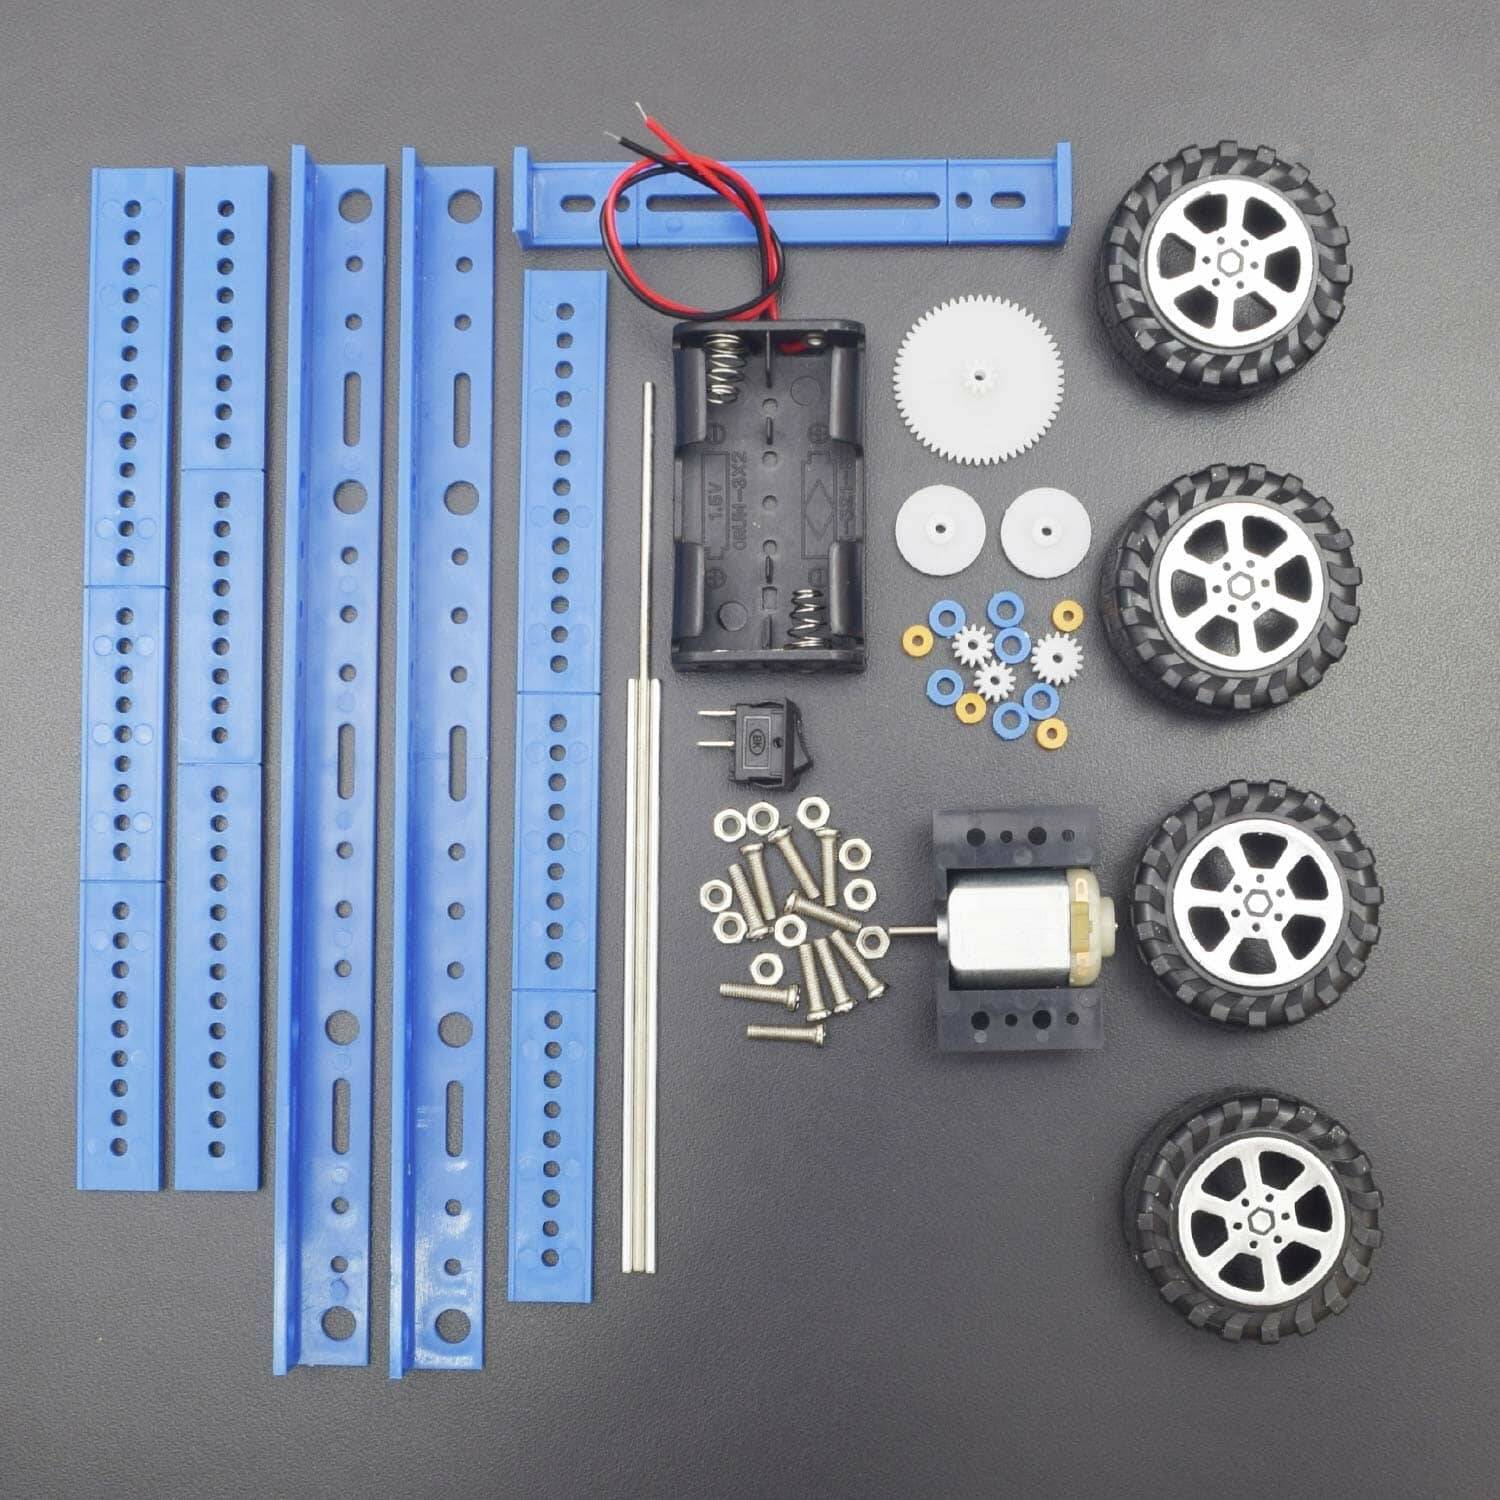 Blue Electric Four-Wheel Drive Remote Control Car Model DIY Hobby 20 x 12 x 4 cm - RS1904 - REES52